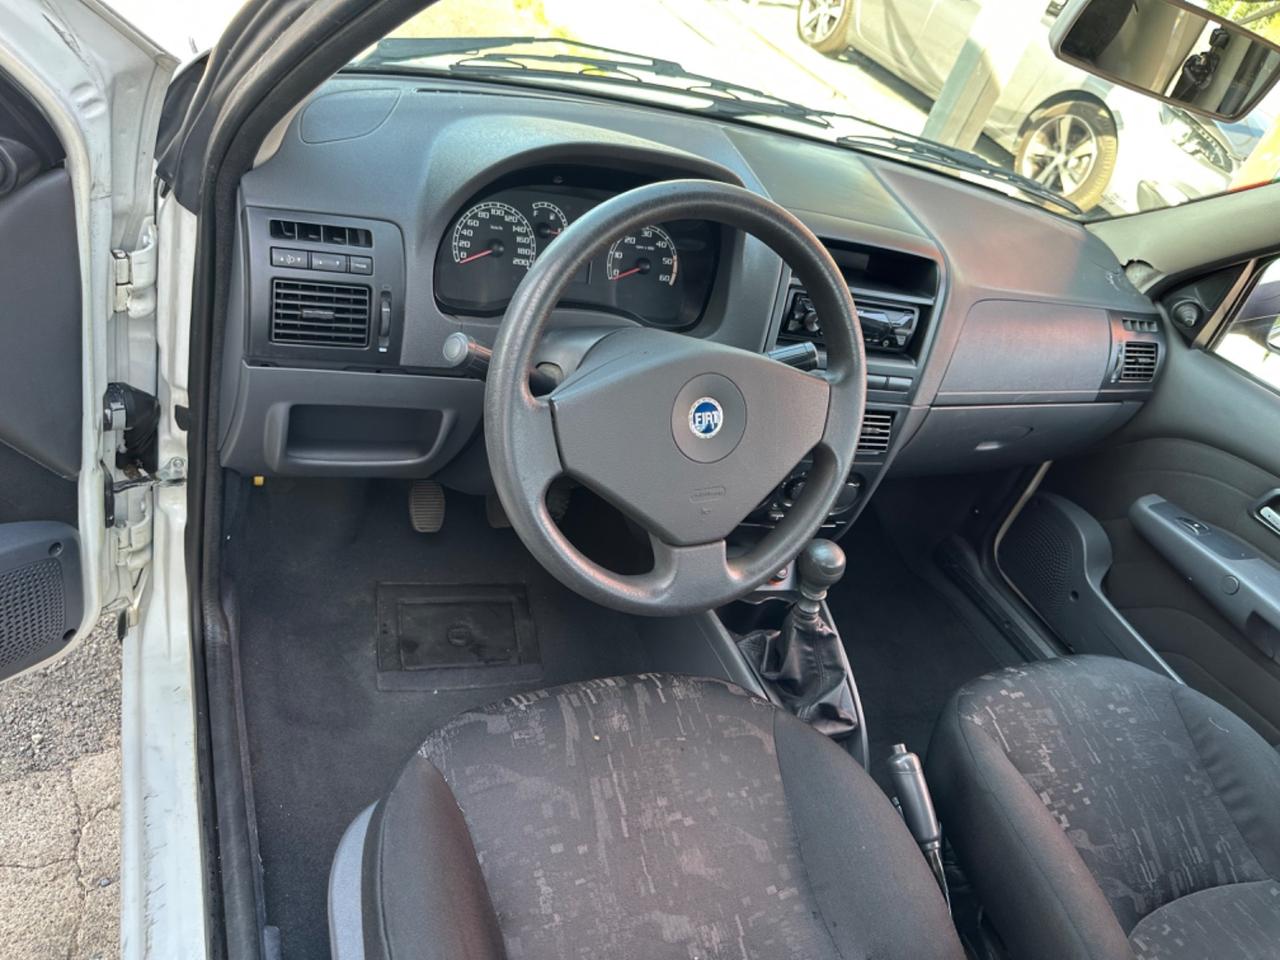 Fiat Strada 1.3 Multijet 95 MILA KM